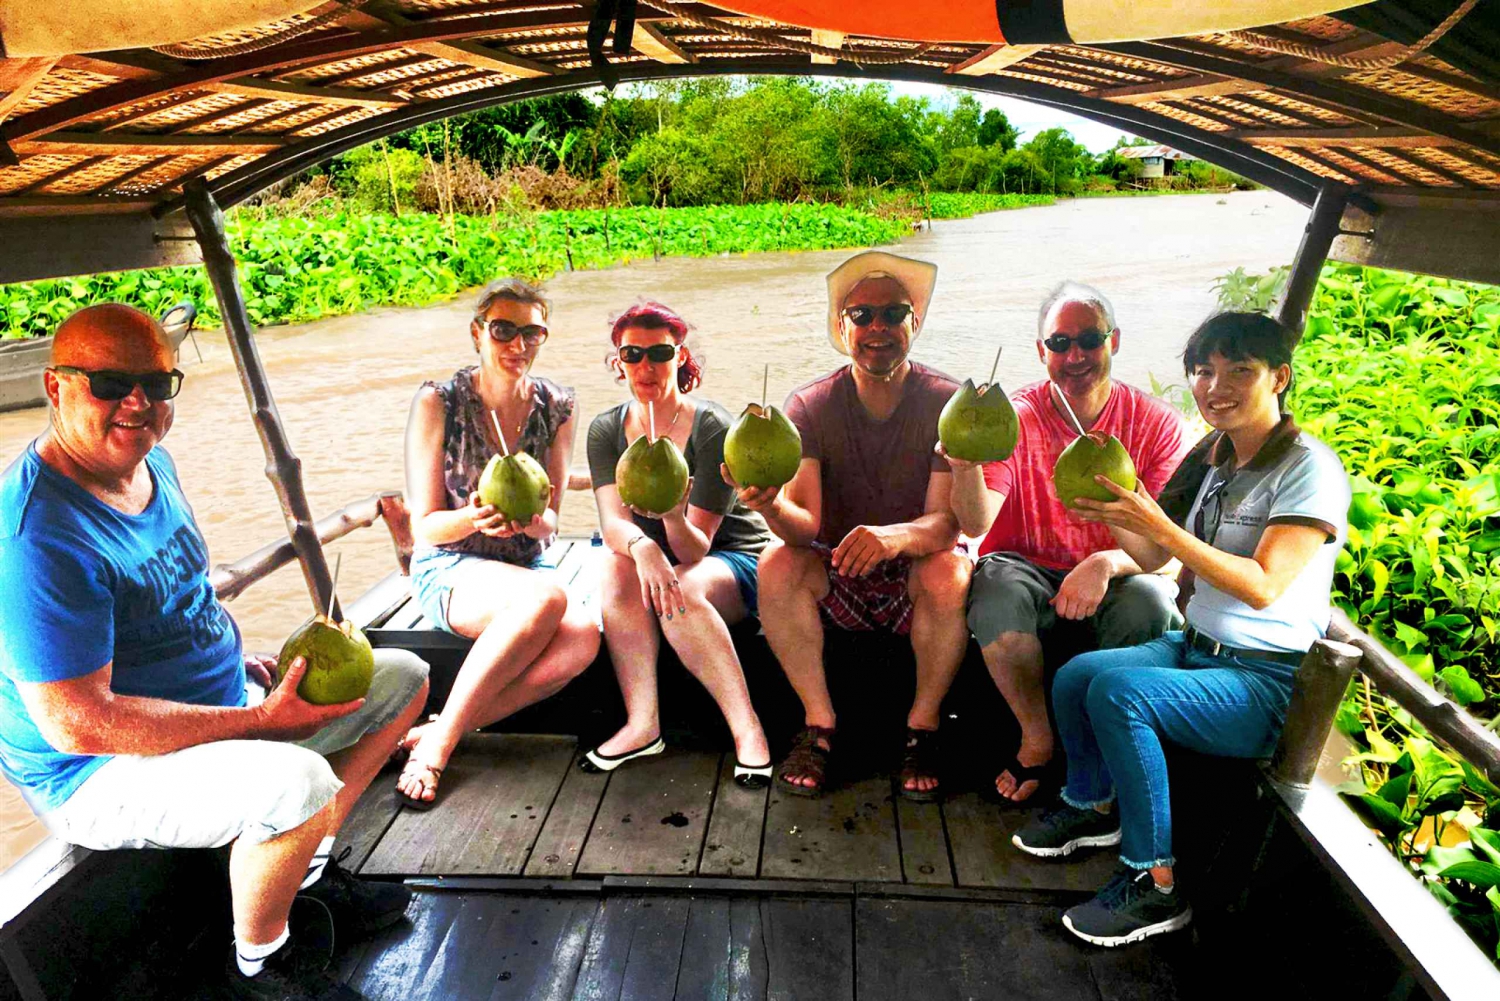 Full Day Nha Trang City and Cai River Tour